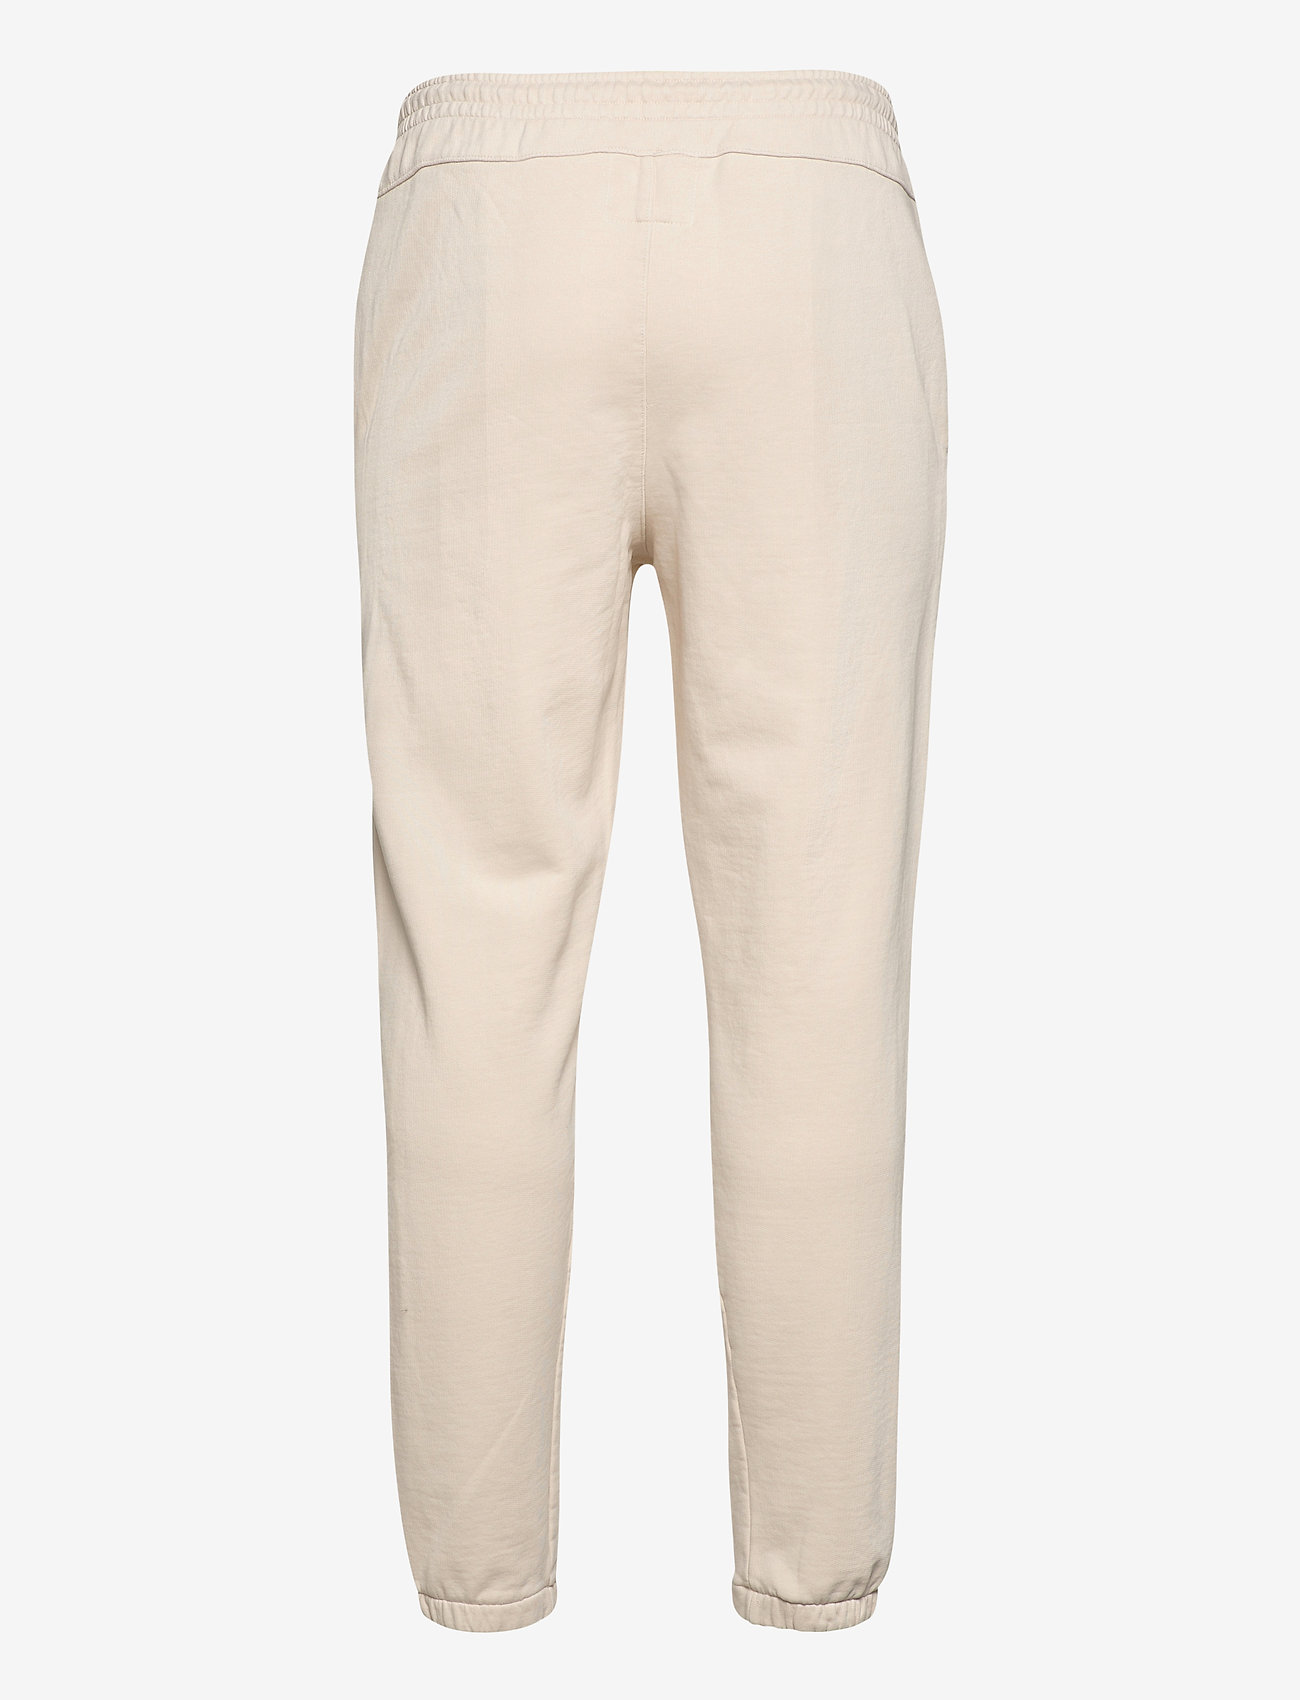 HALO - HALO Cotton Sweat Pants - sportinio tipo kelnės - tapioca - 1